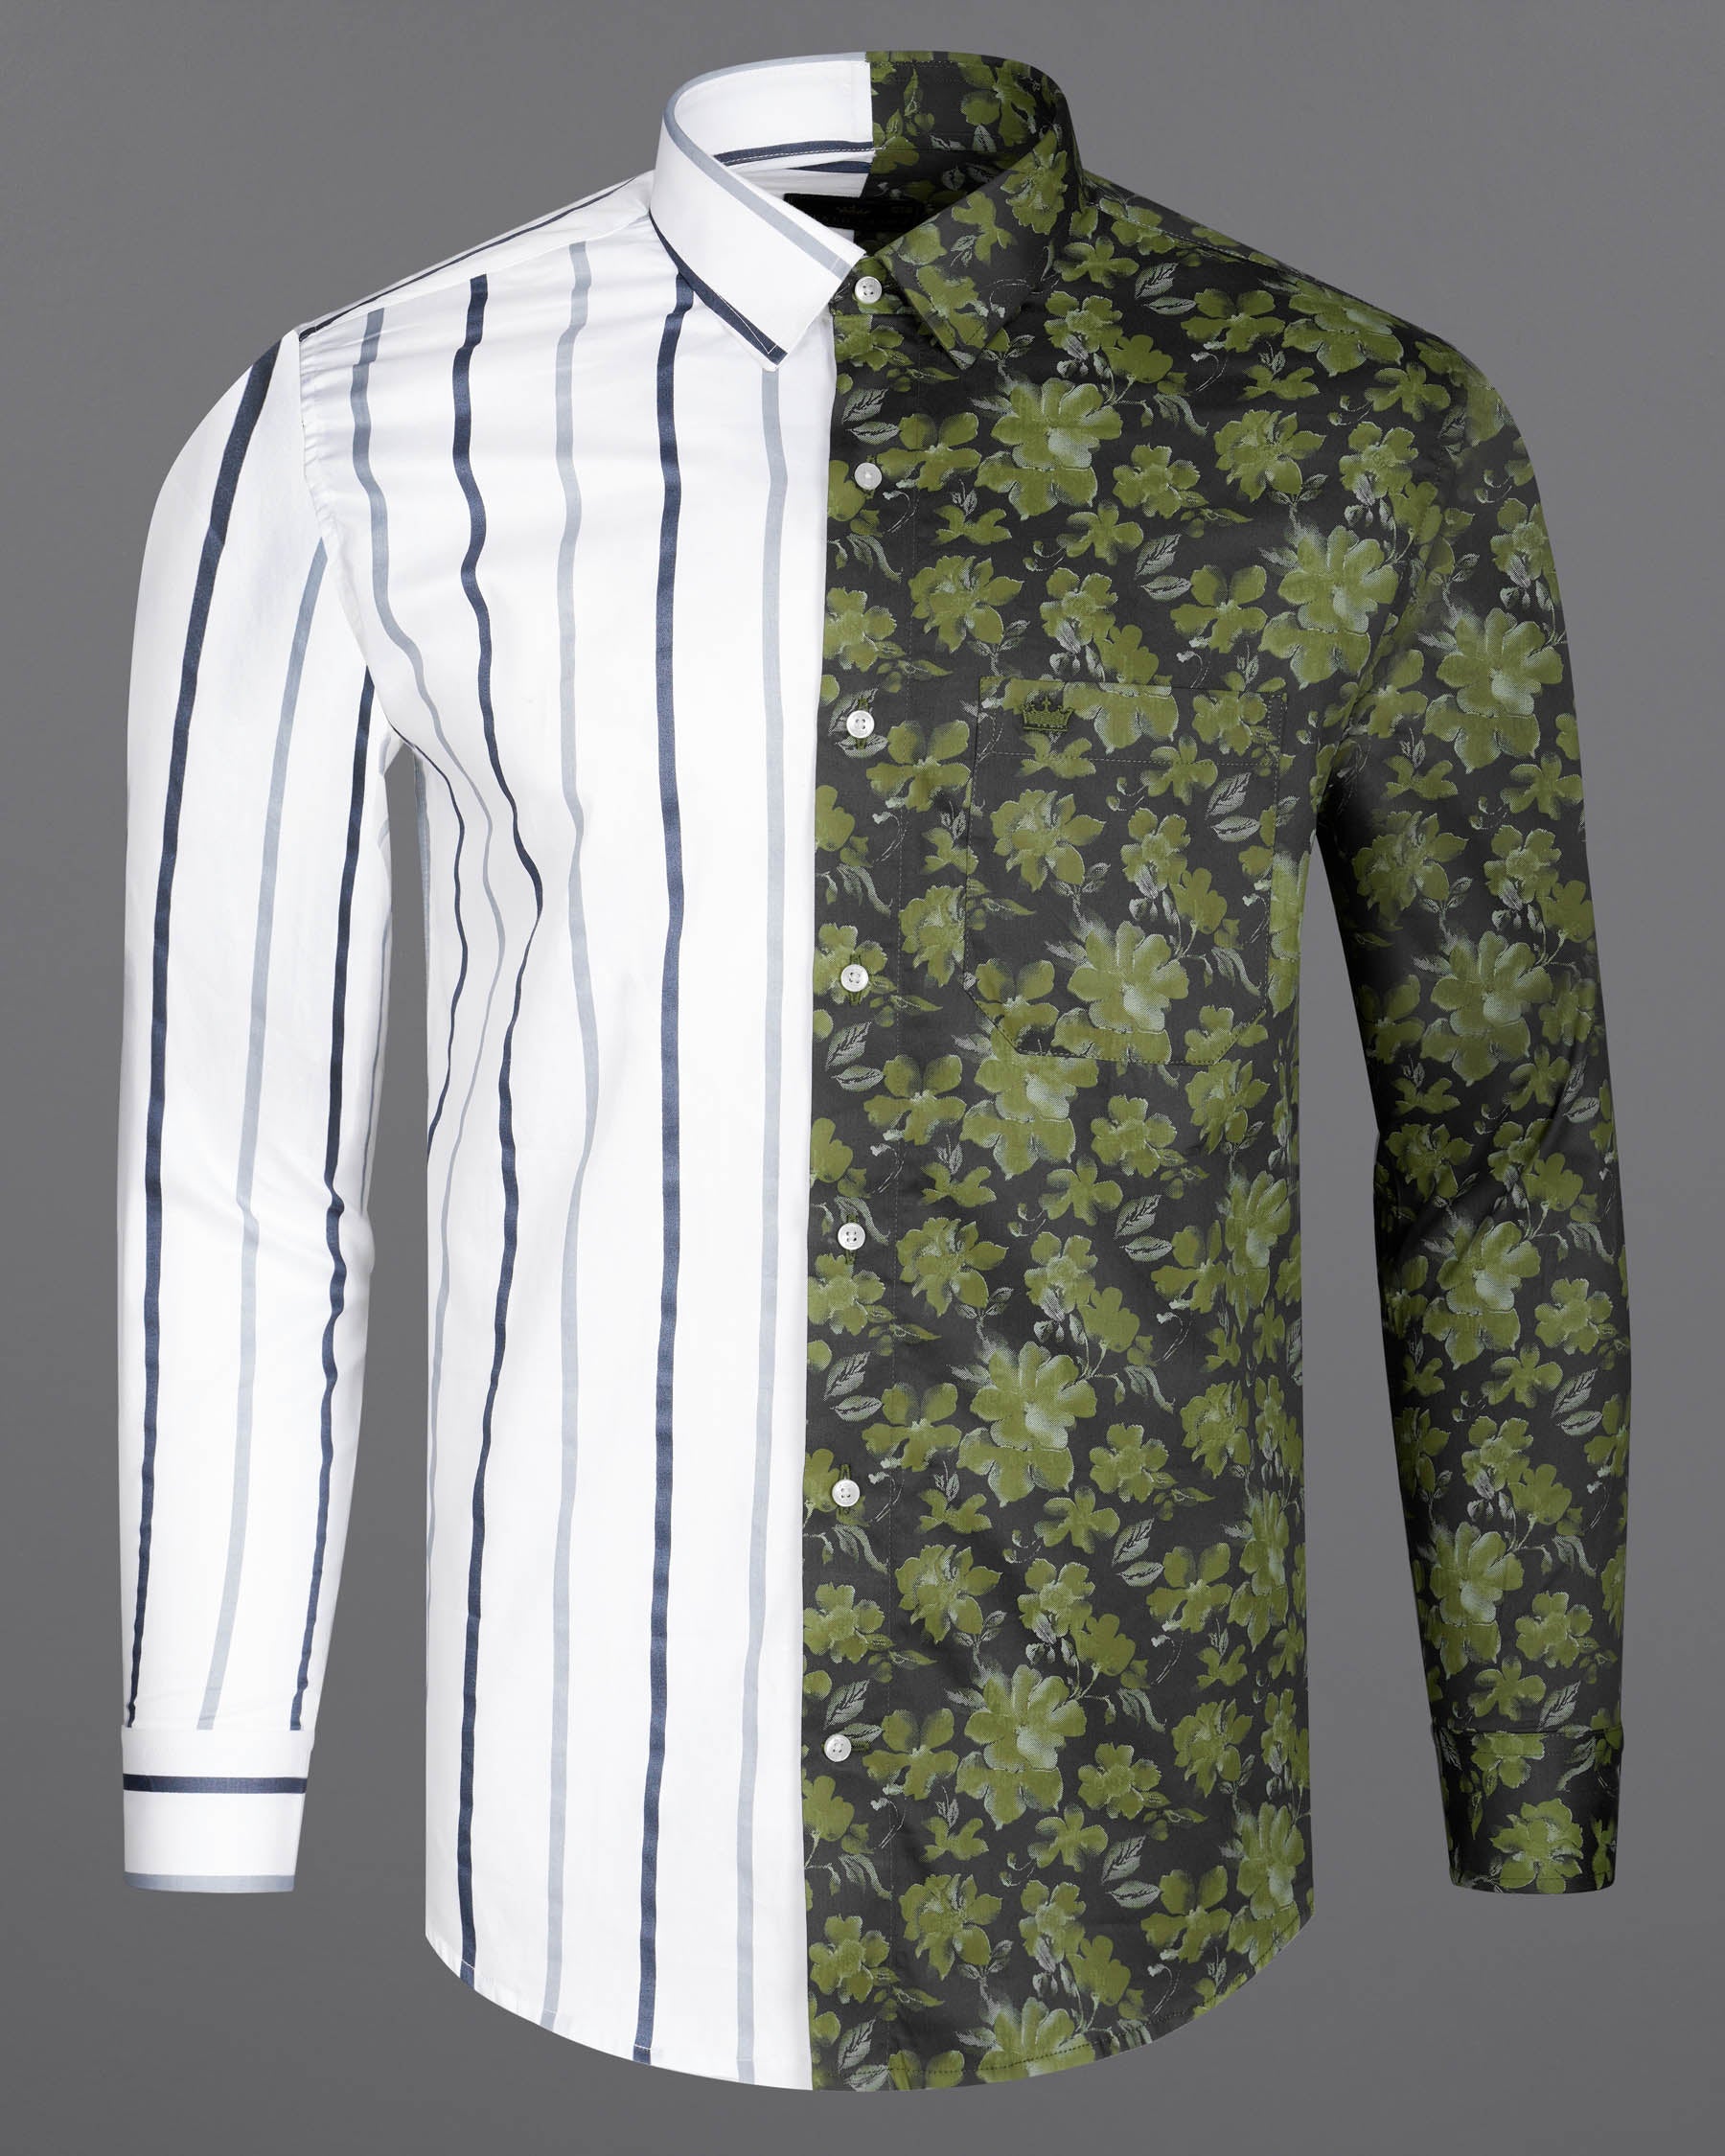 Half White-Striped With Half Clay Creek Green-Floral Printed Premium Cotton Designer Shirt 7949-P67-38,7949-P67-H-38,7949-P67-39,7949-P67-H-39,7949-P67-40,7949-P67-H-40,7949-P67-42,7949-P67-H-42,7949-P67-44,7949-P67-H-44,7949-P67-46,7949-P67-H-46,7949-P67-48,7949-P67-H-48,7949-P67-50,7949-P67-H-50,7949-P67-52,7949-P67-H-52